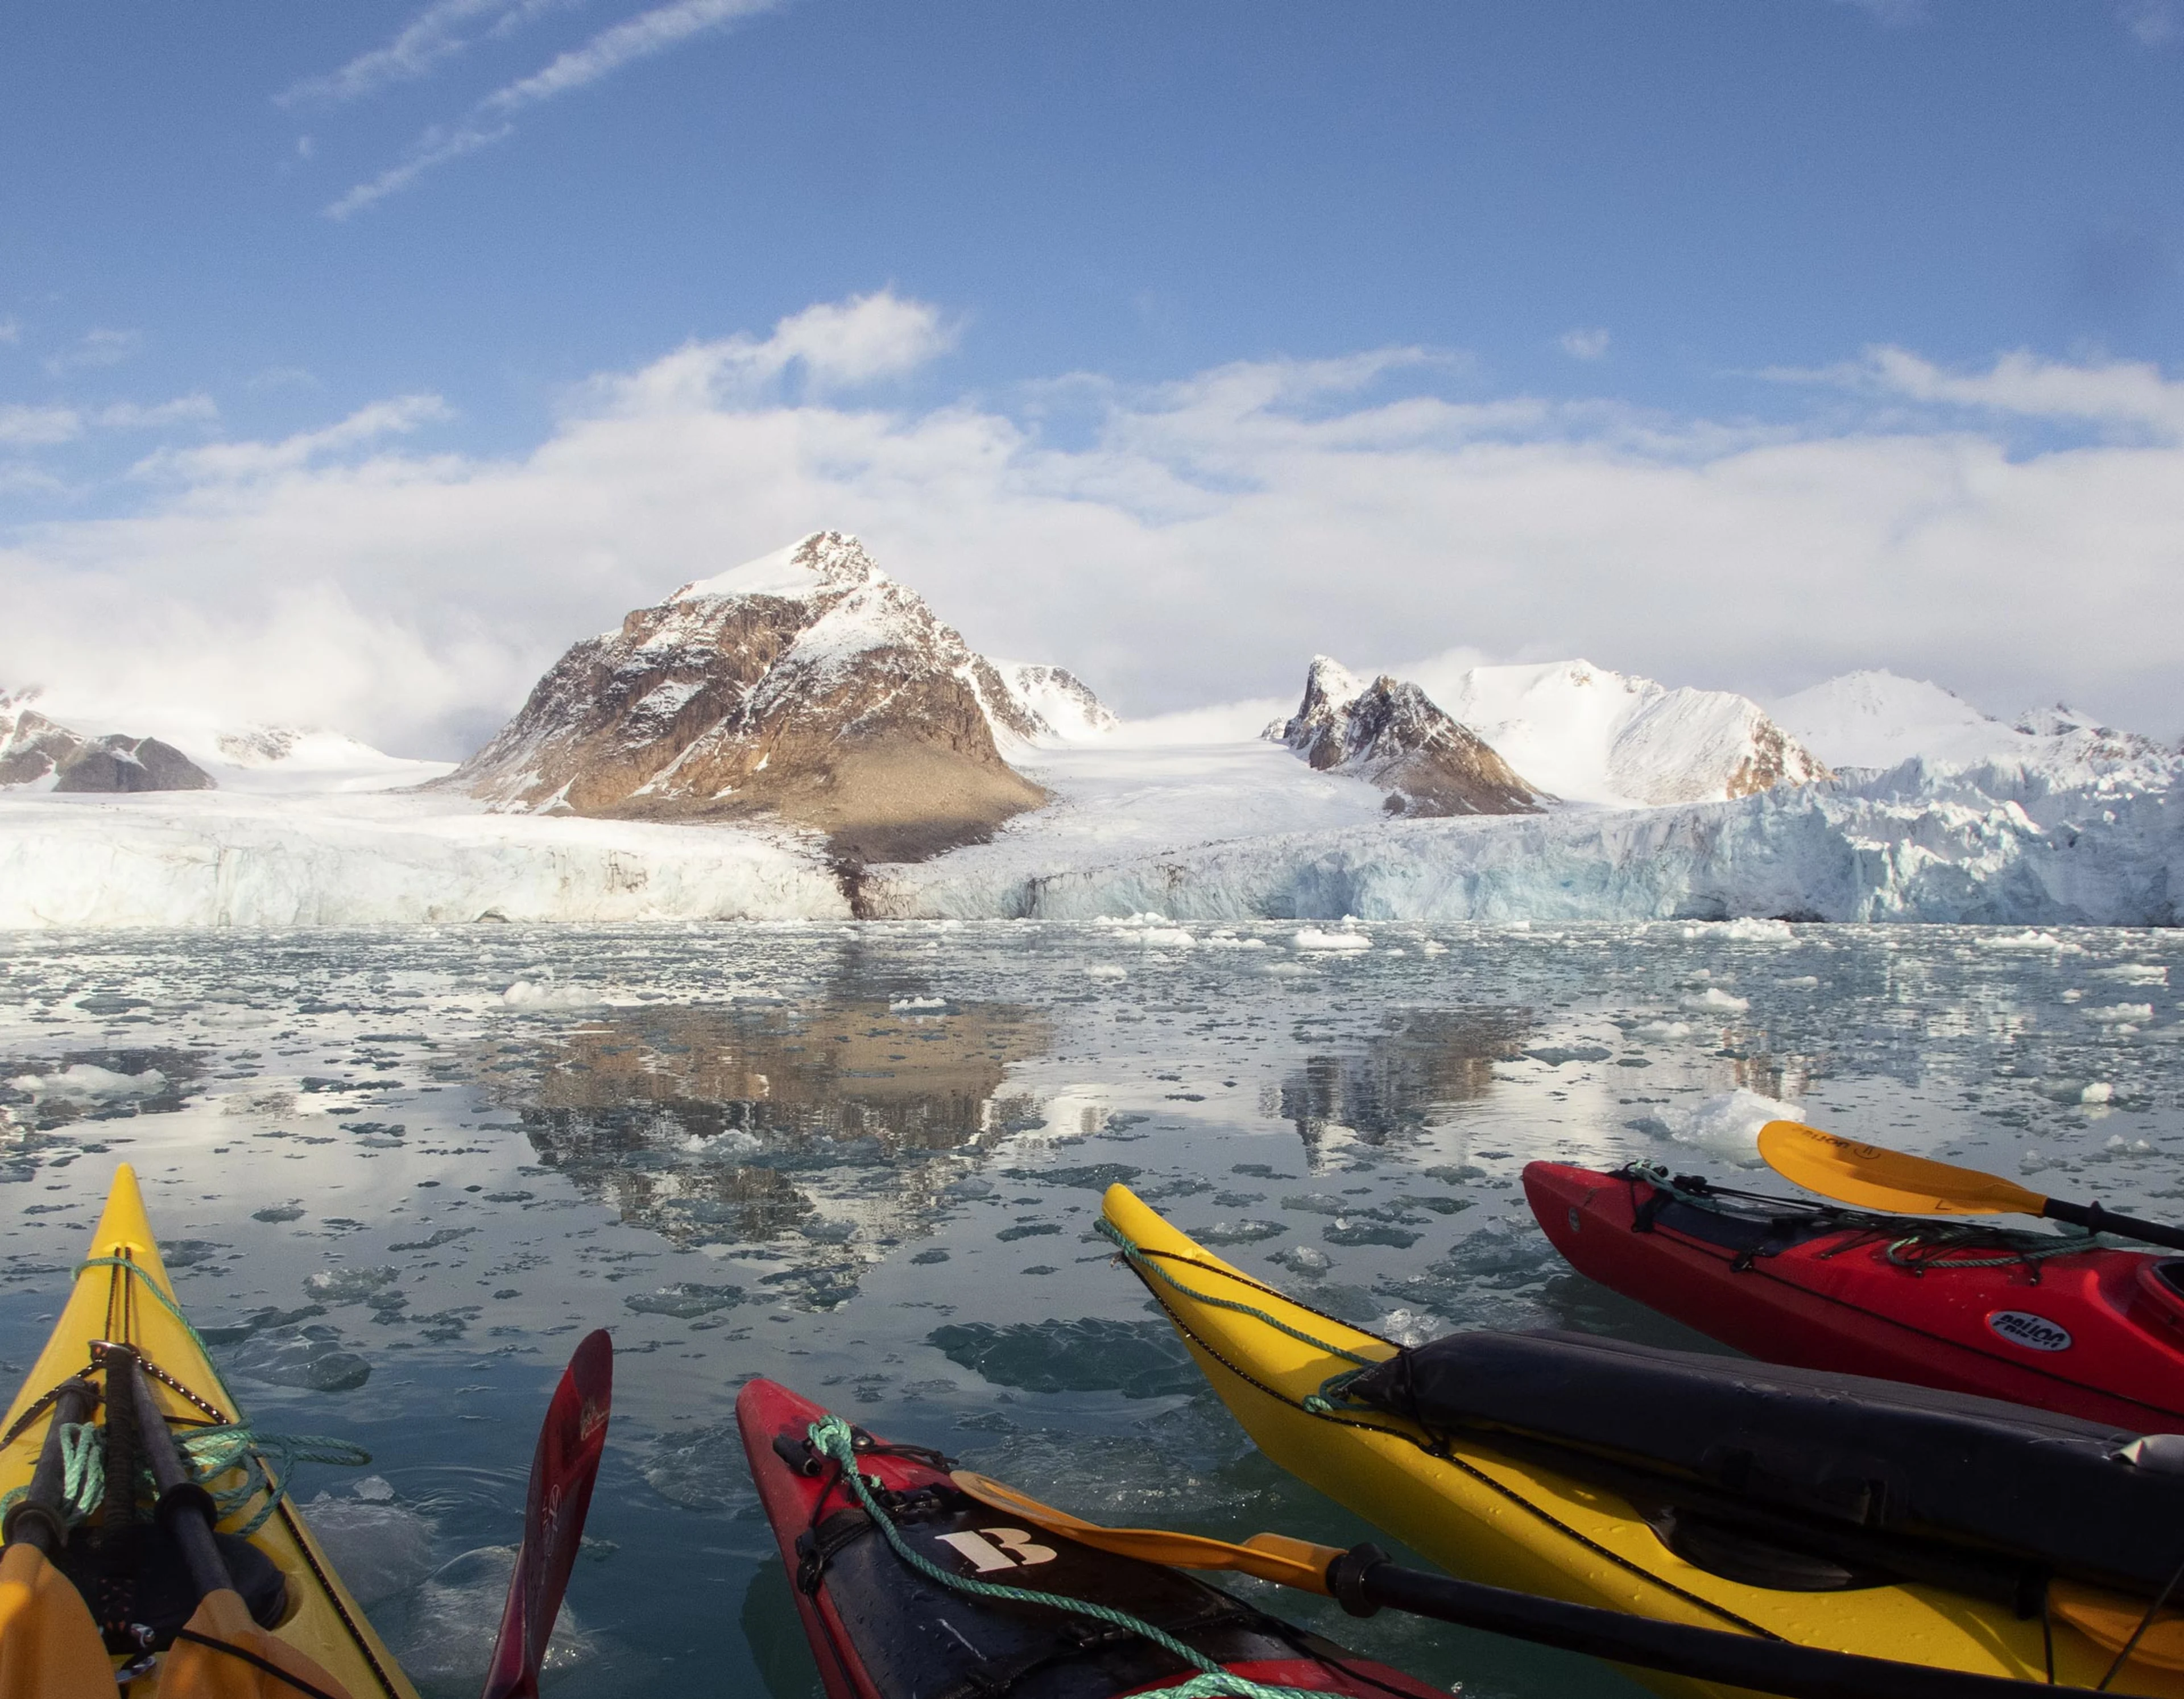 Kayaking the icy waters around Spitsbergen